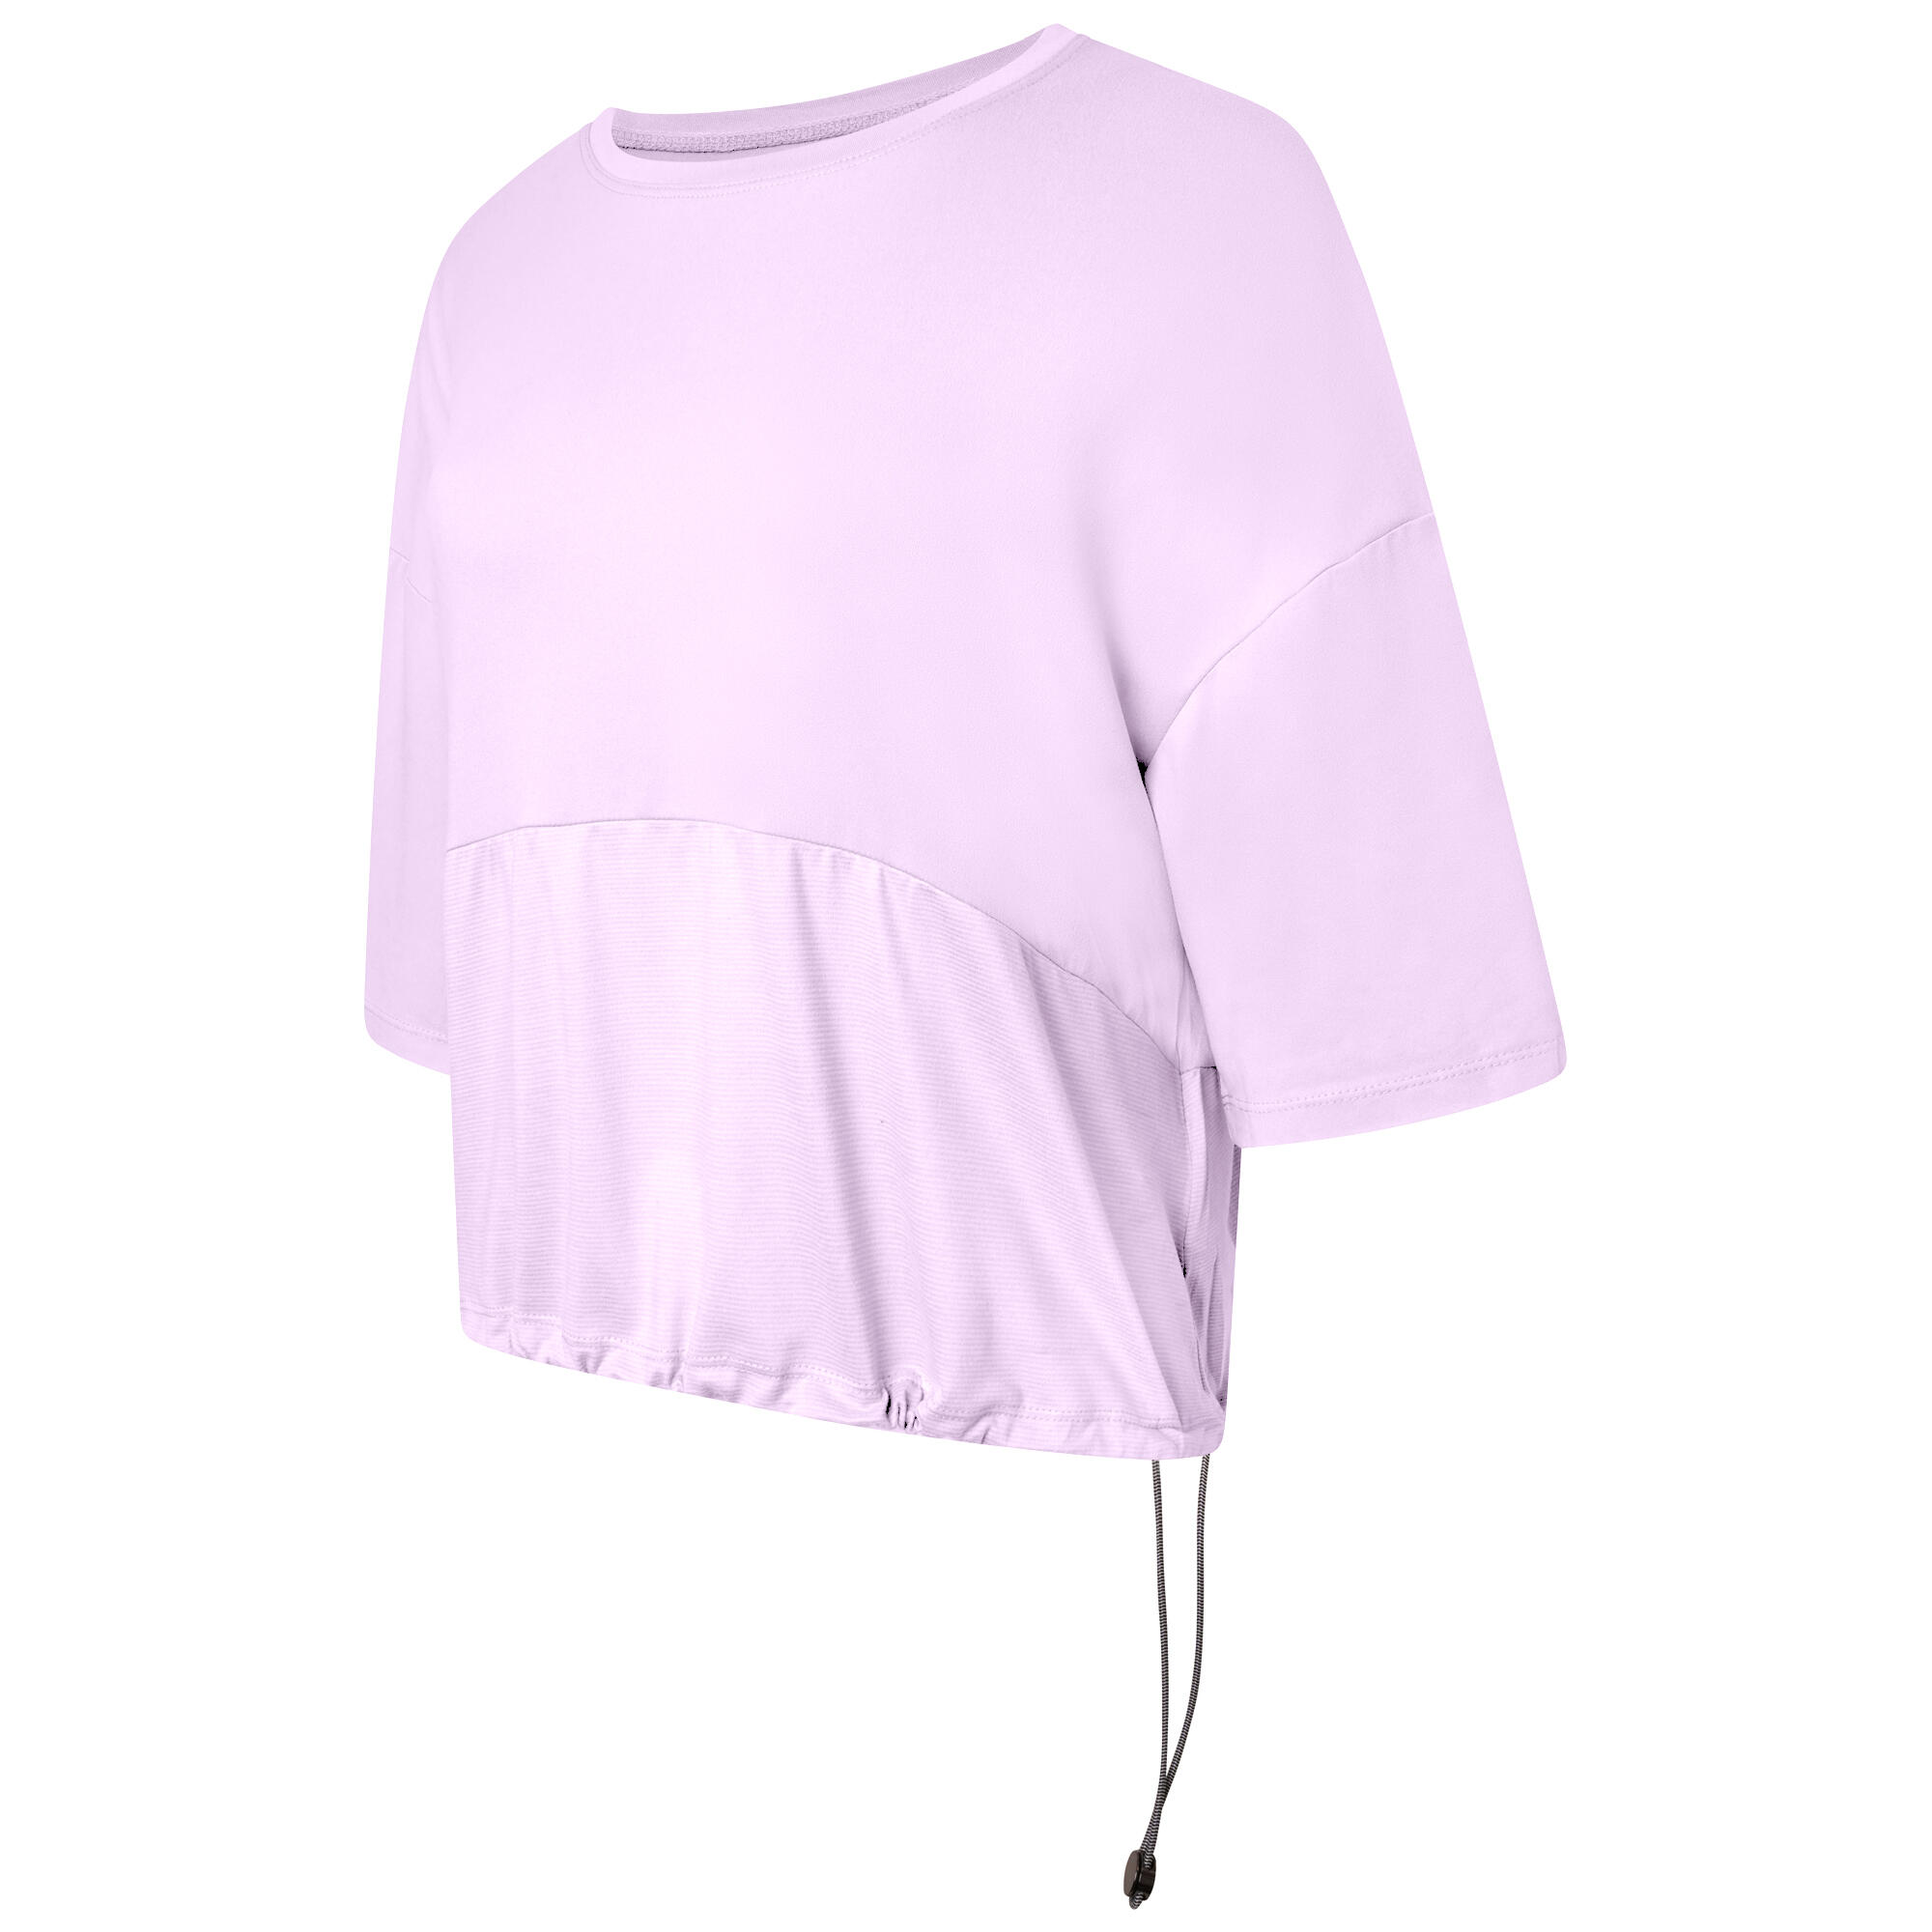 Henry Holland Cut Loose Womens Gym T-Shirt - Lilac 2/5